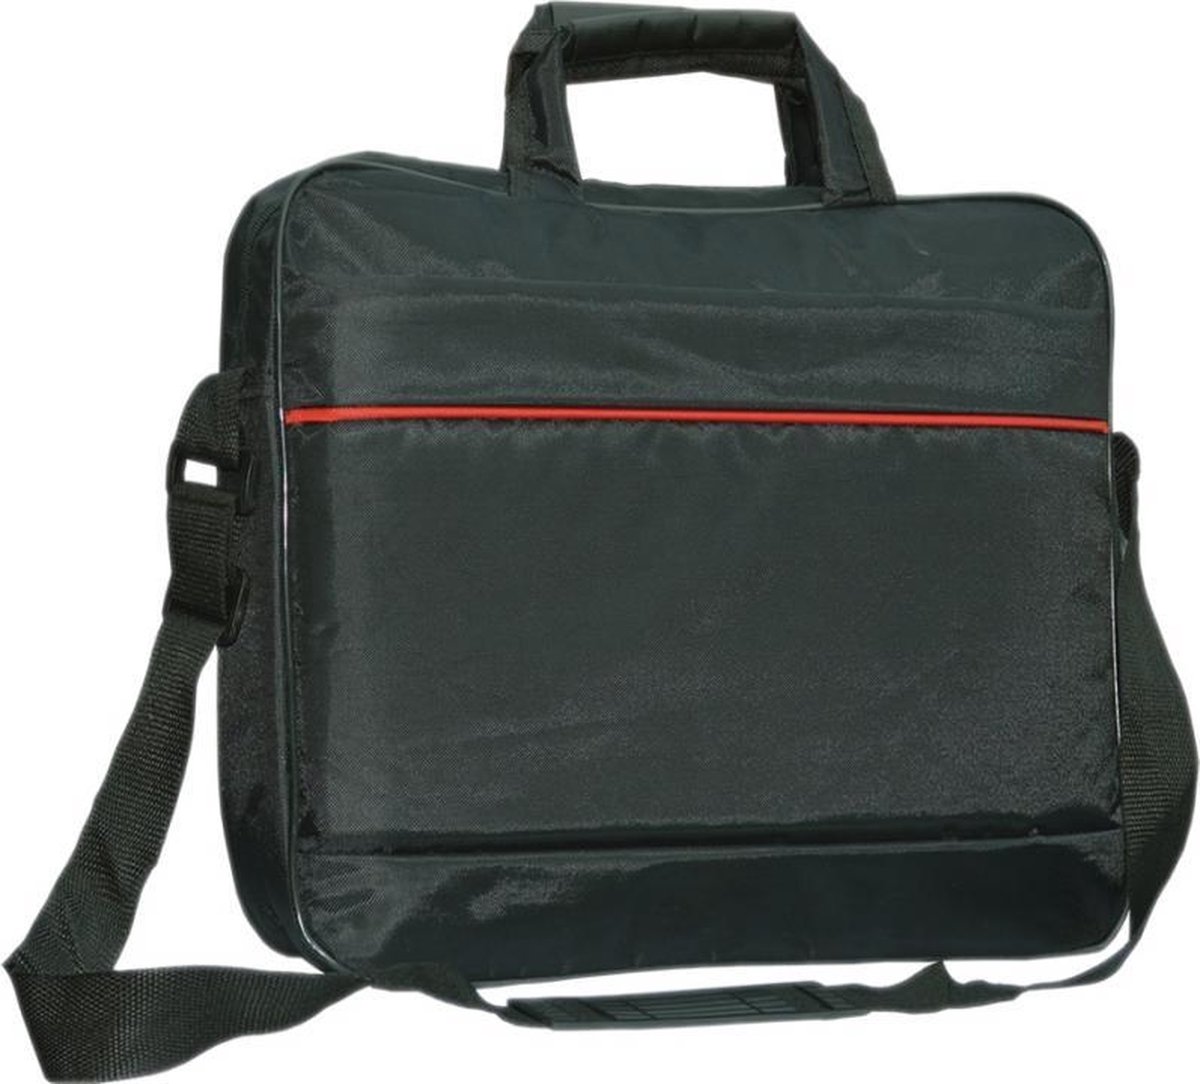 Asus Vivobook S451la Ca175h laptoptas messenger bag / schoudertas / tas , zwart , merk i12Cover